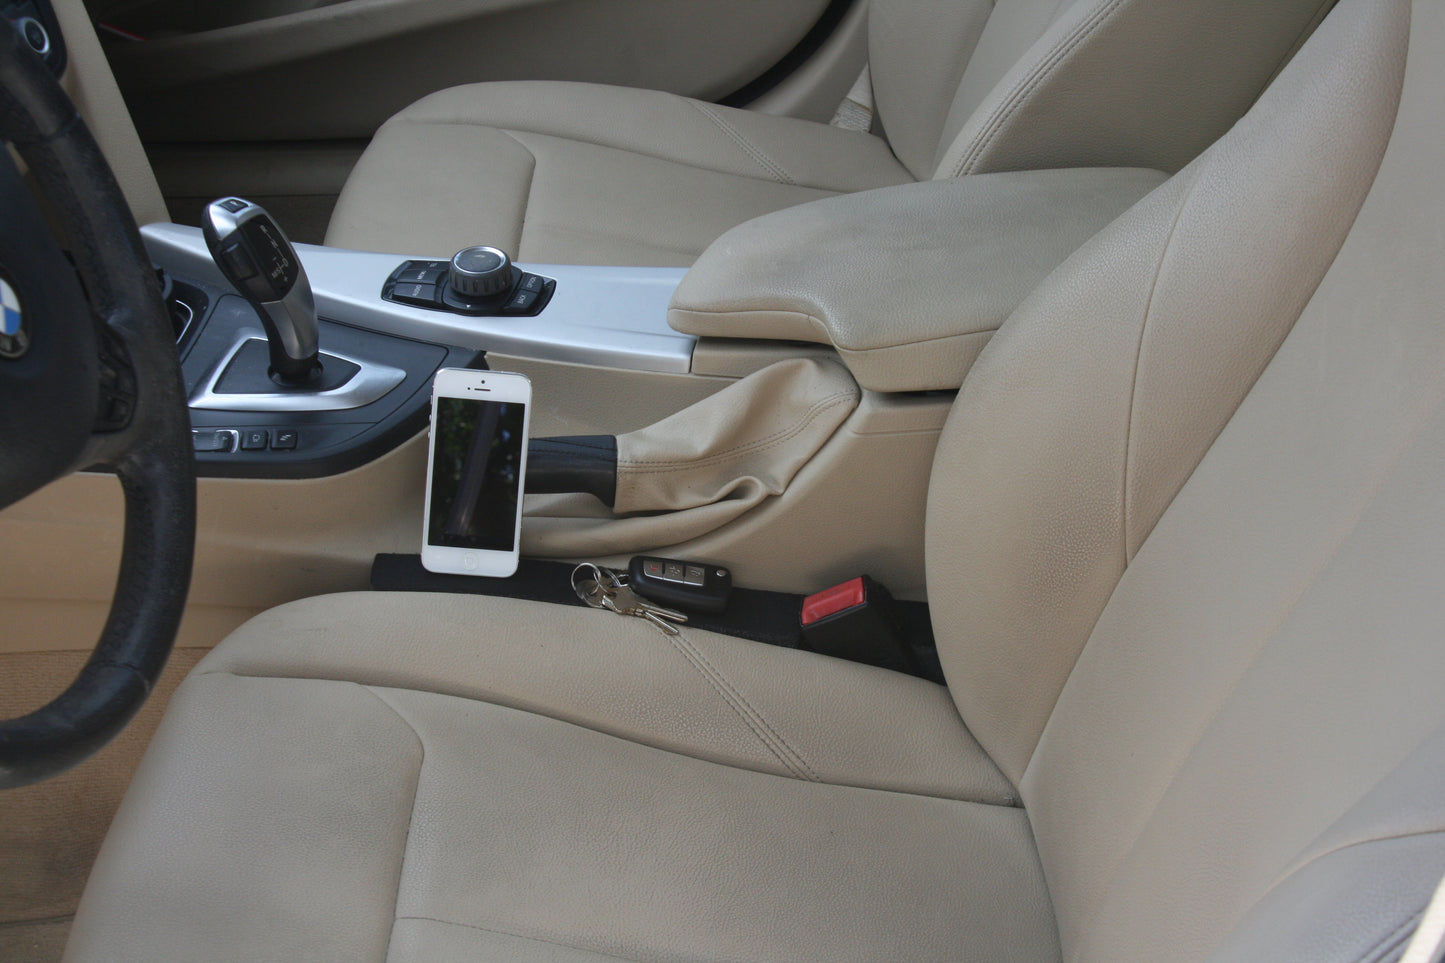 Gap Guard Car Seat Gap Filler Stopping Cell Phone And Car Keys